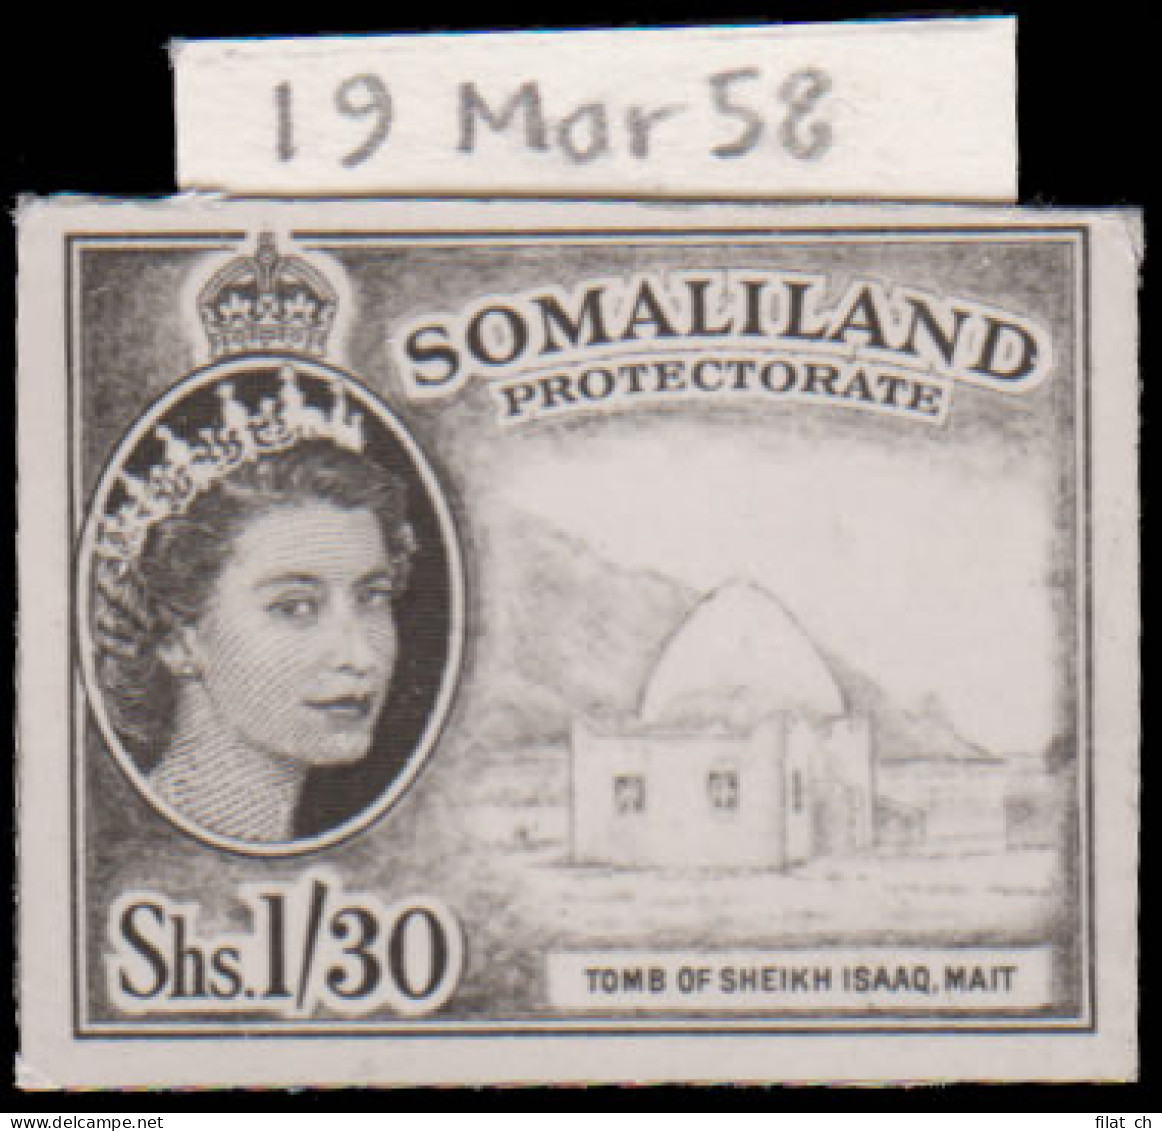 Somaliland 1958 QEII Bradbury Record Book Photo-Essay, Unique - Somaliland (Protectorate ...-1959)